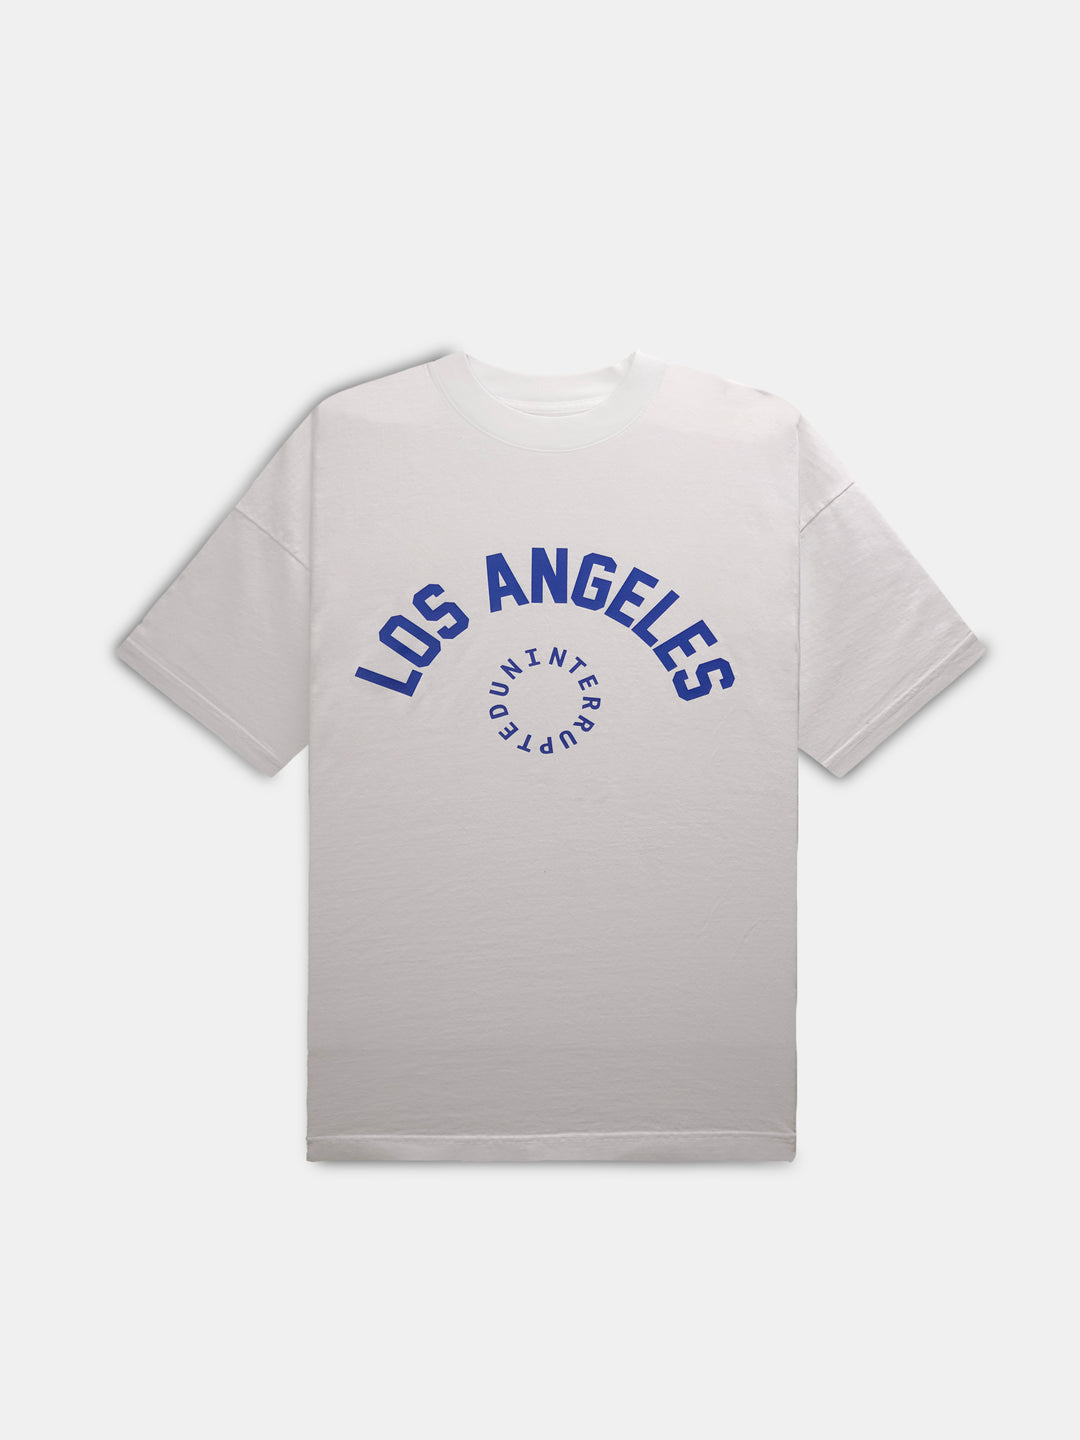 Los Angeles Circle Logo Tee White